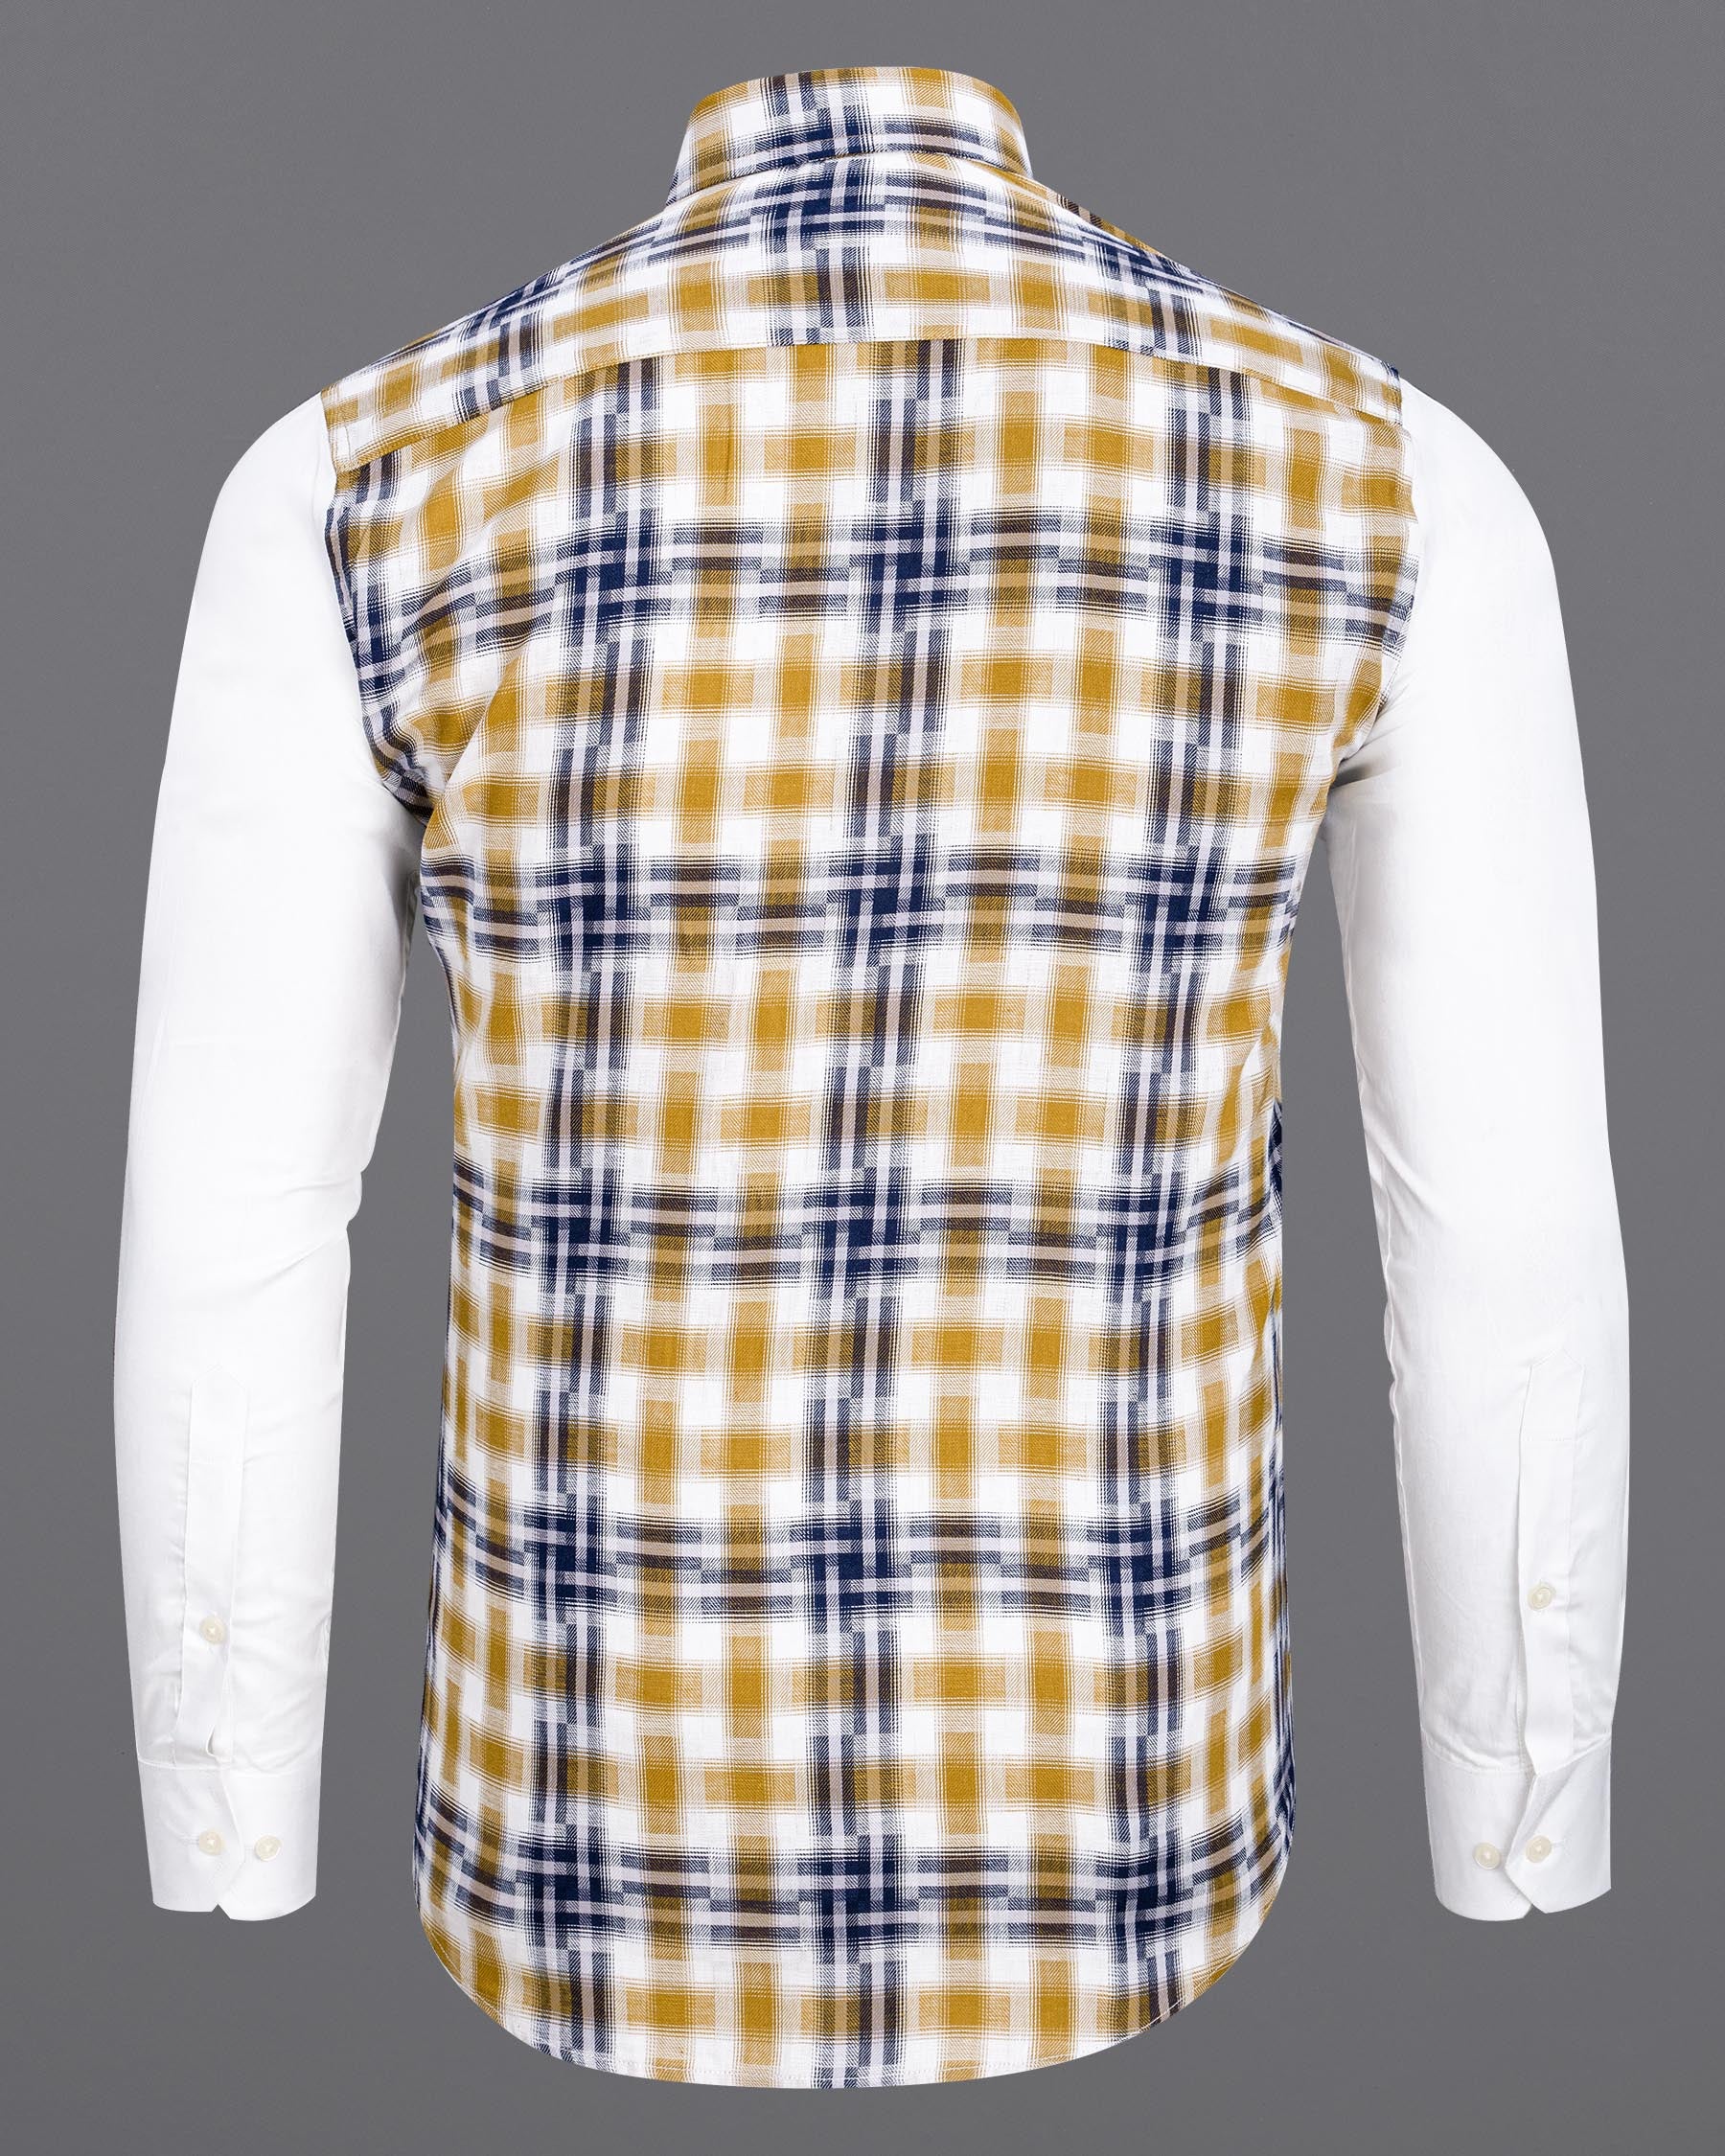 Half White Half Checkered Twill Premium Cotton Shirt